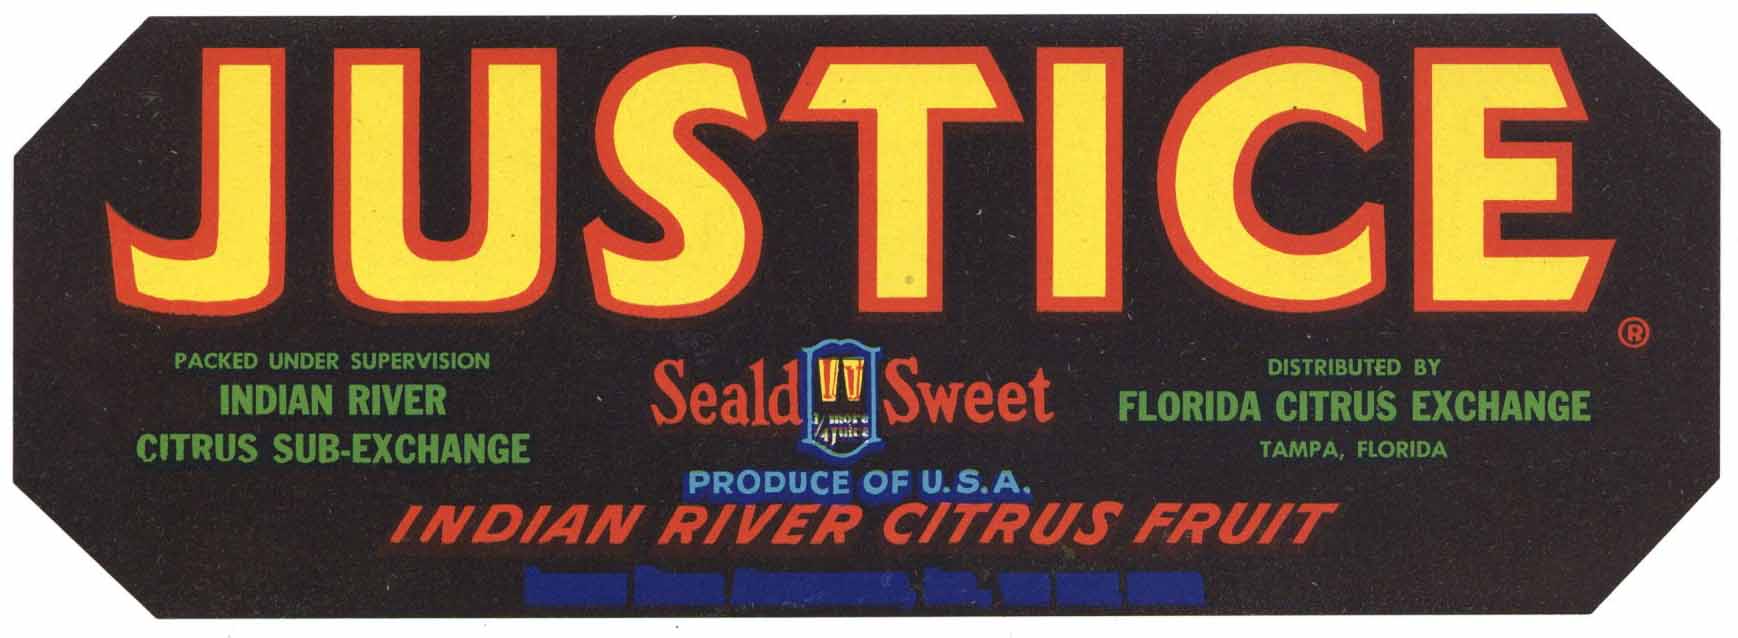 Justice Brand Vintage Tampa Florida Citrus Crate Label, str